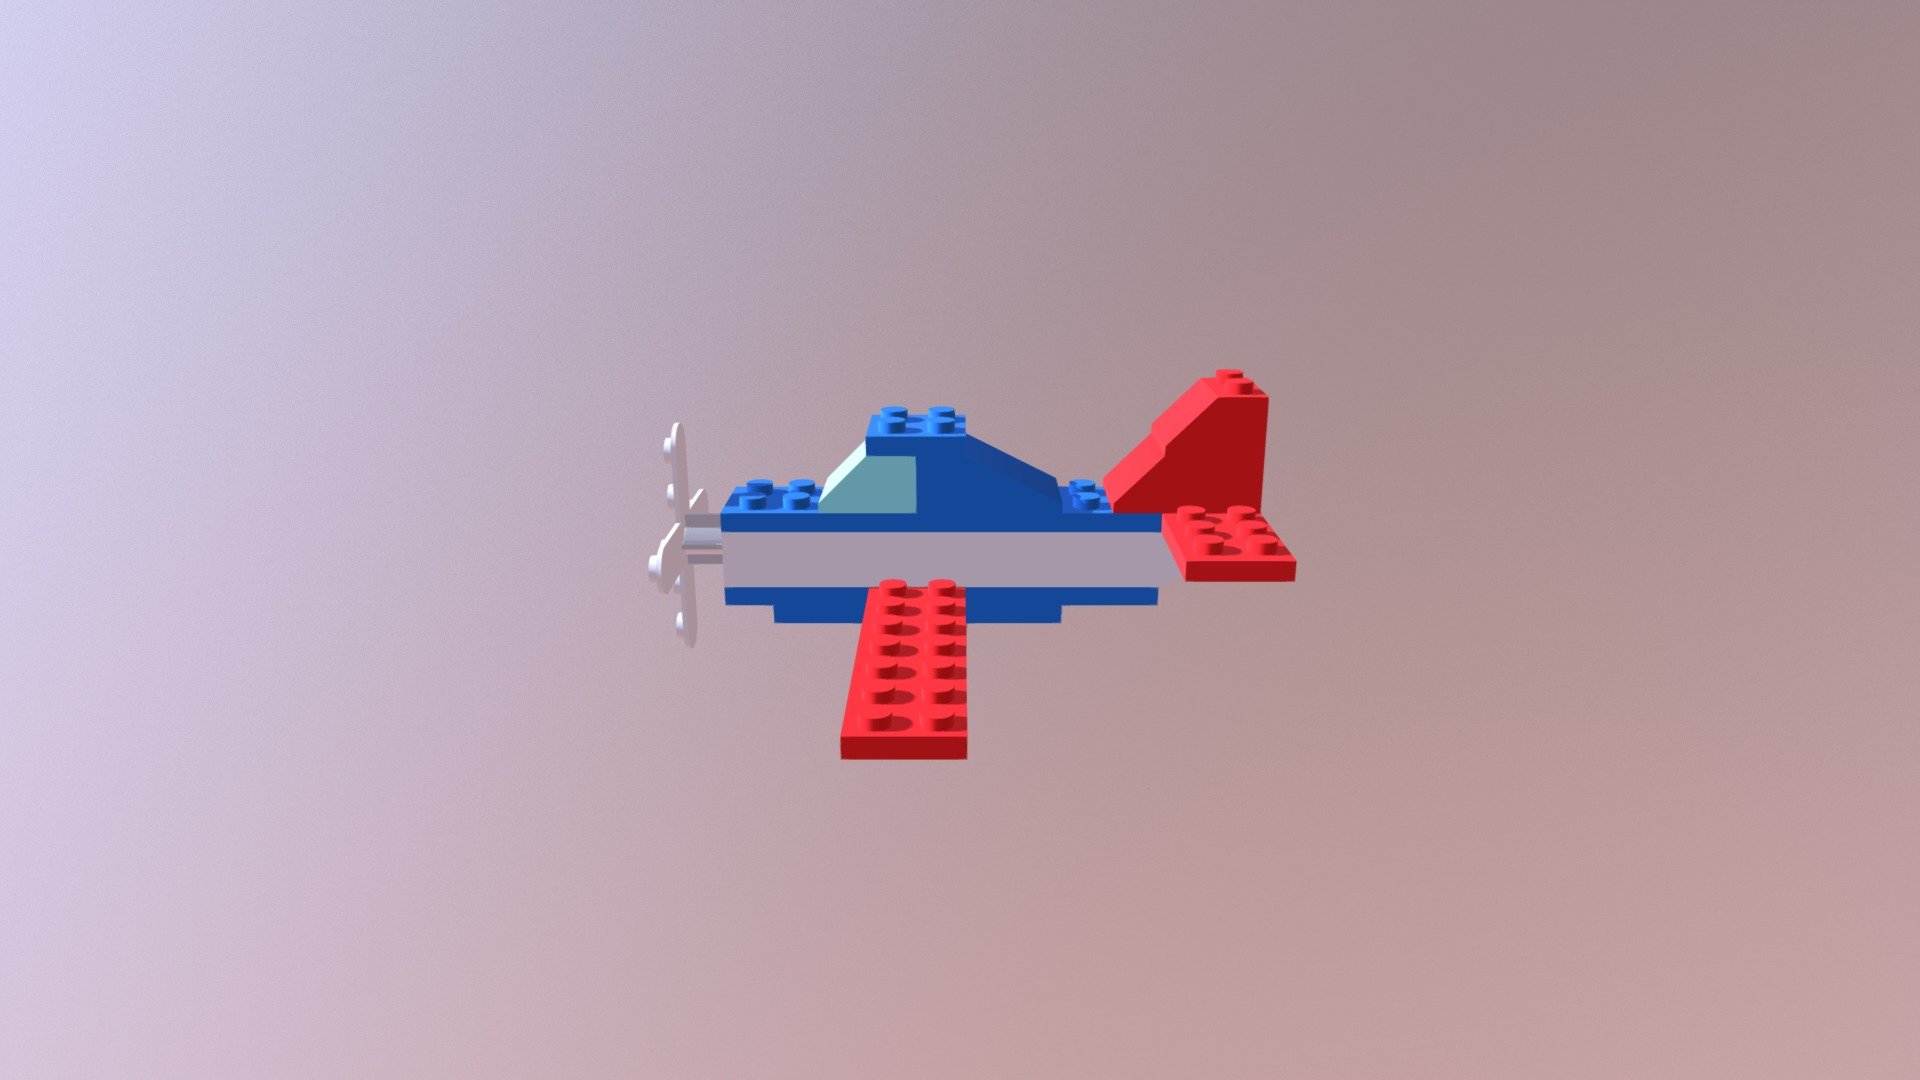 Lego Plane made in Maya